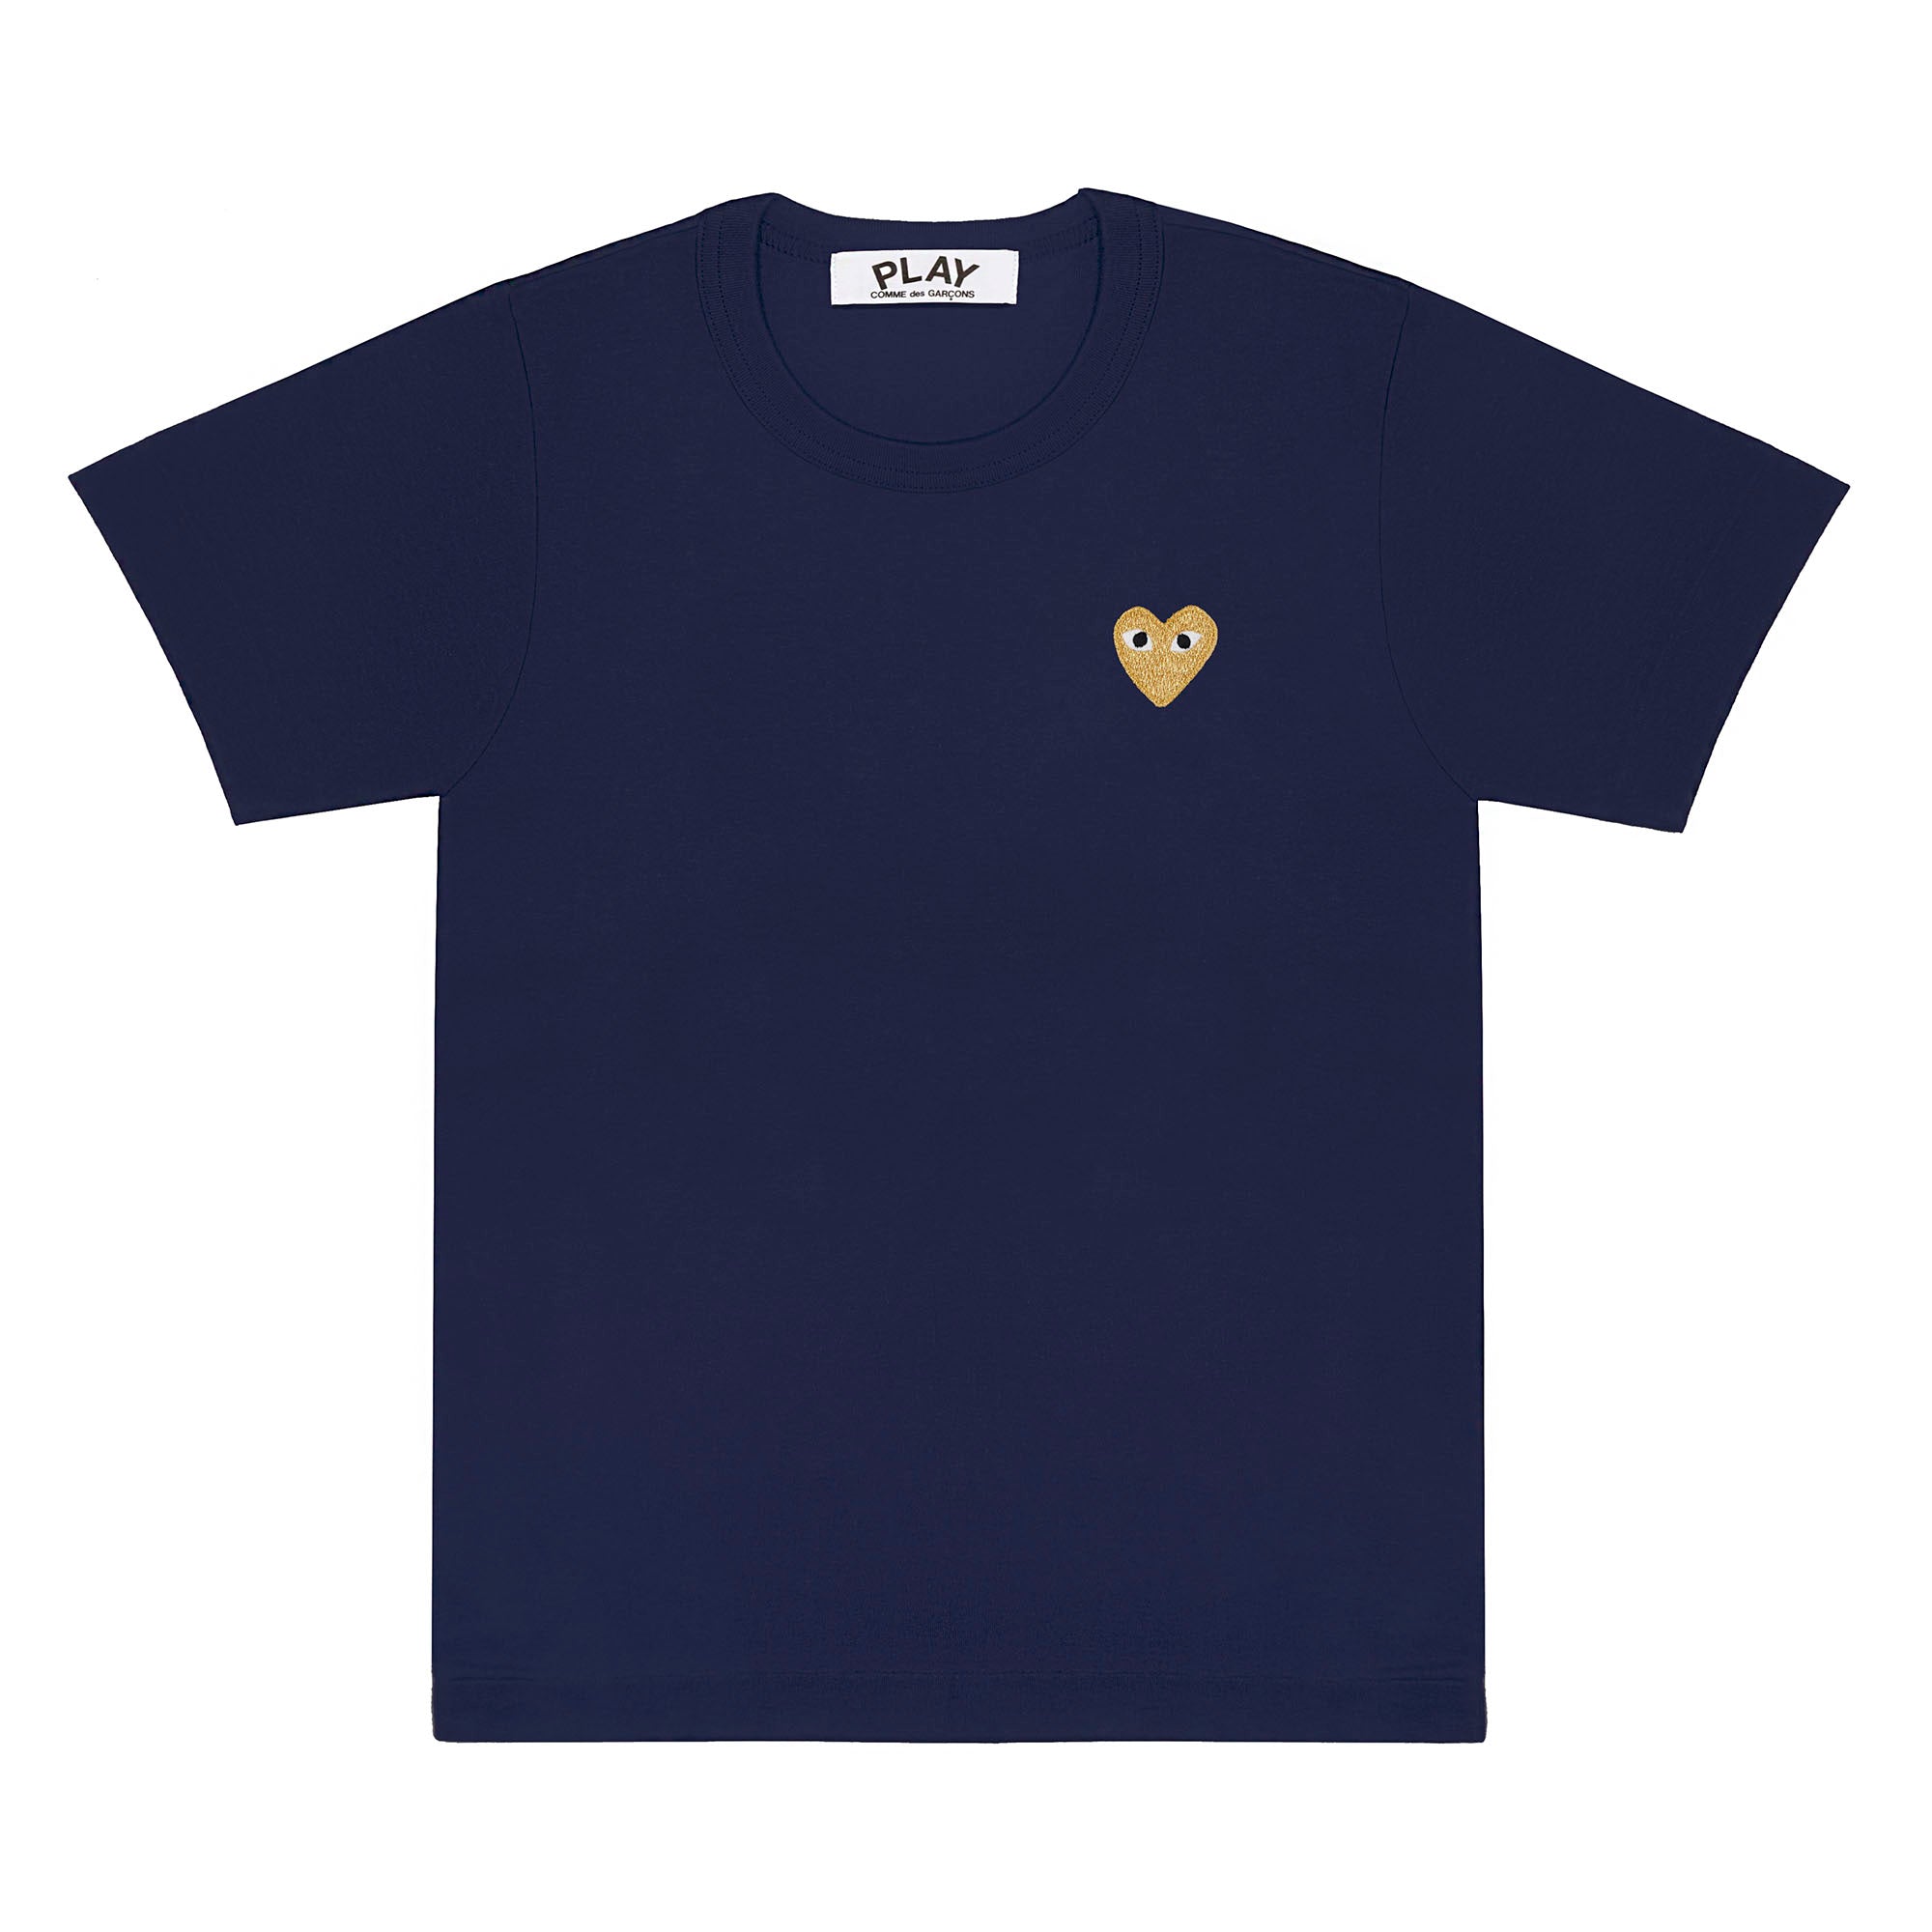 Play - Gold Heart T-Shirt - (Navy) view 1